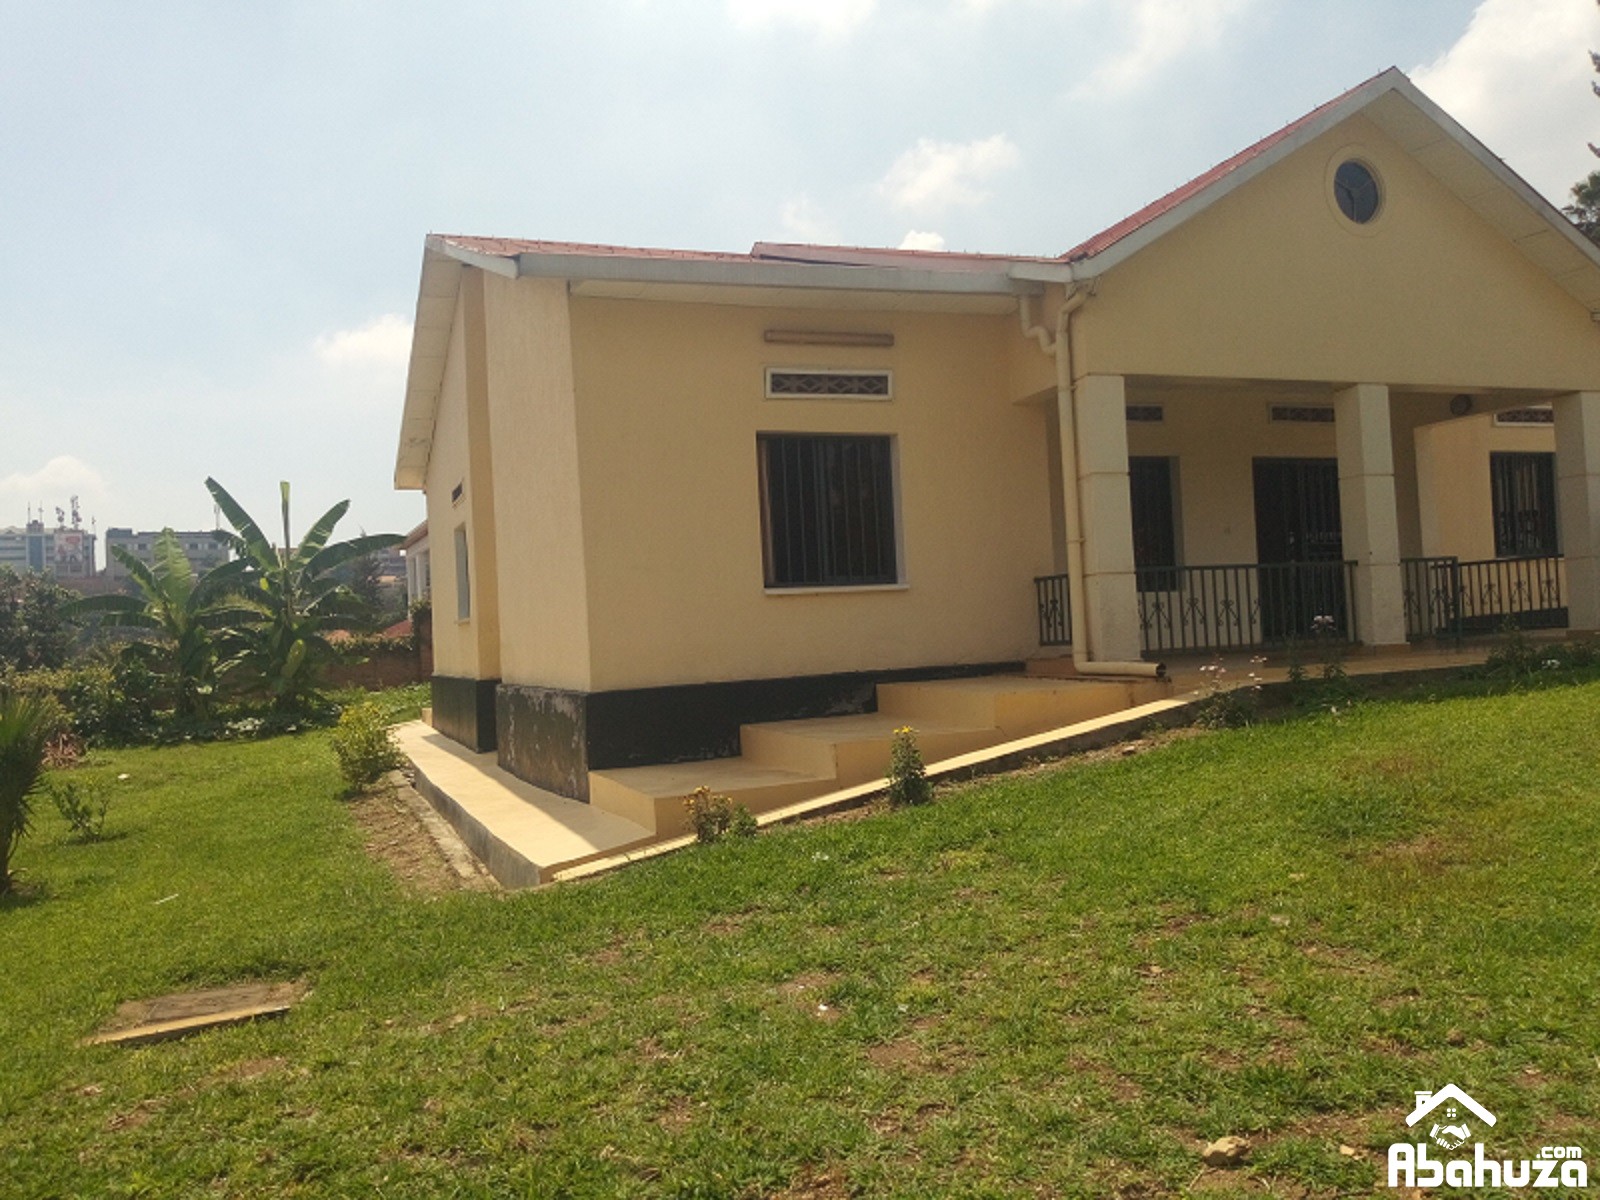 A FURNISHED 4 BEDROOM HOUSE FOR RENT IN KIGALI AT GISHUSHU